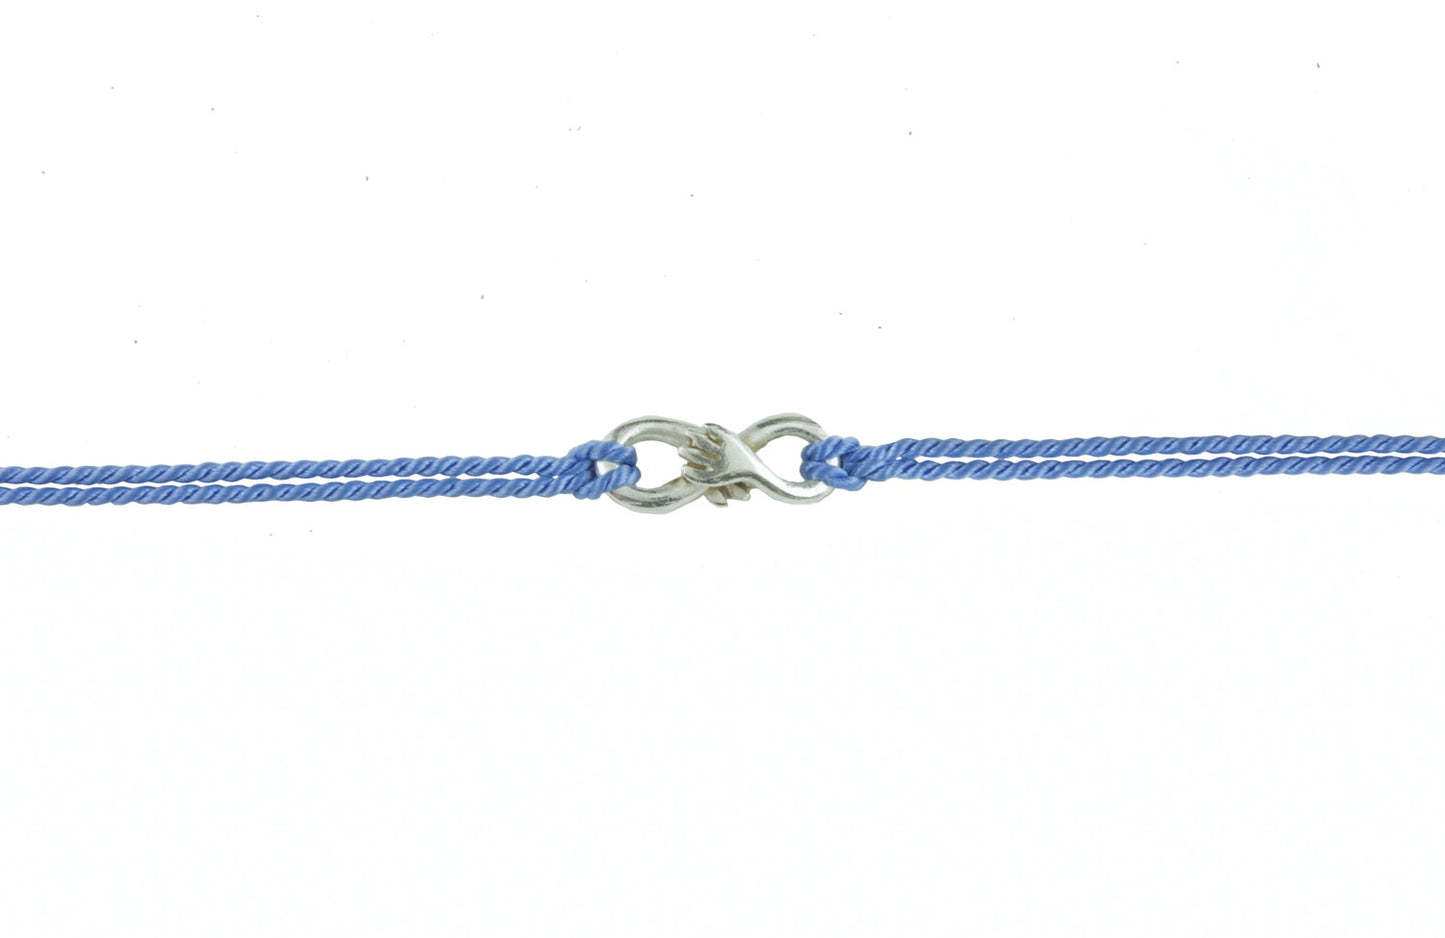 Cuddle charm bracelet on Cornflower Blue silk thread